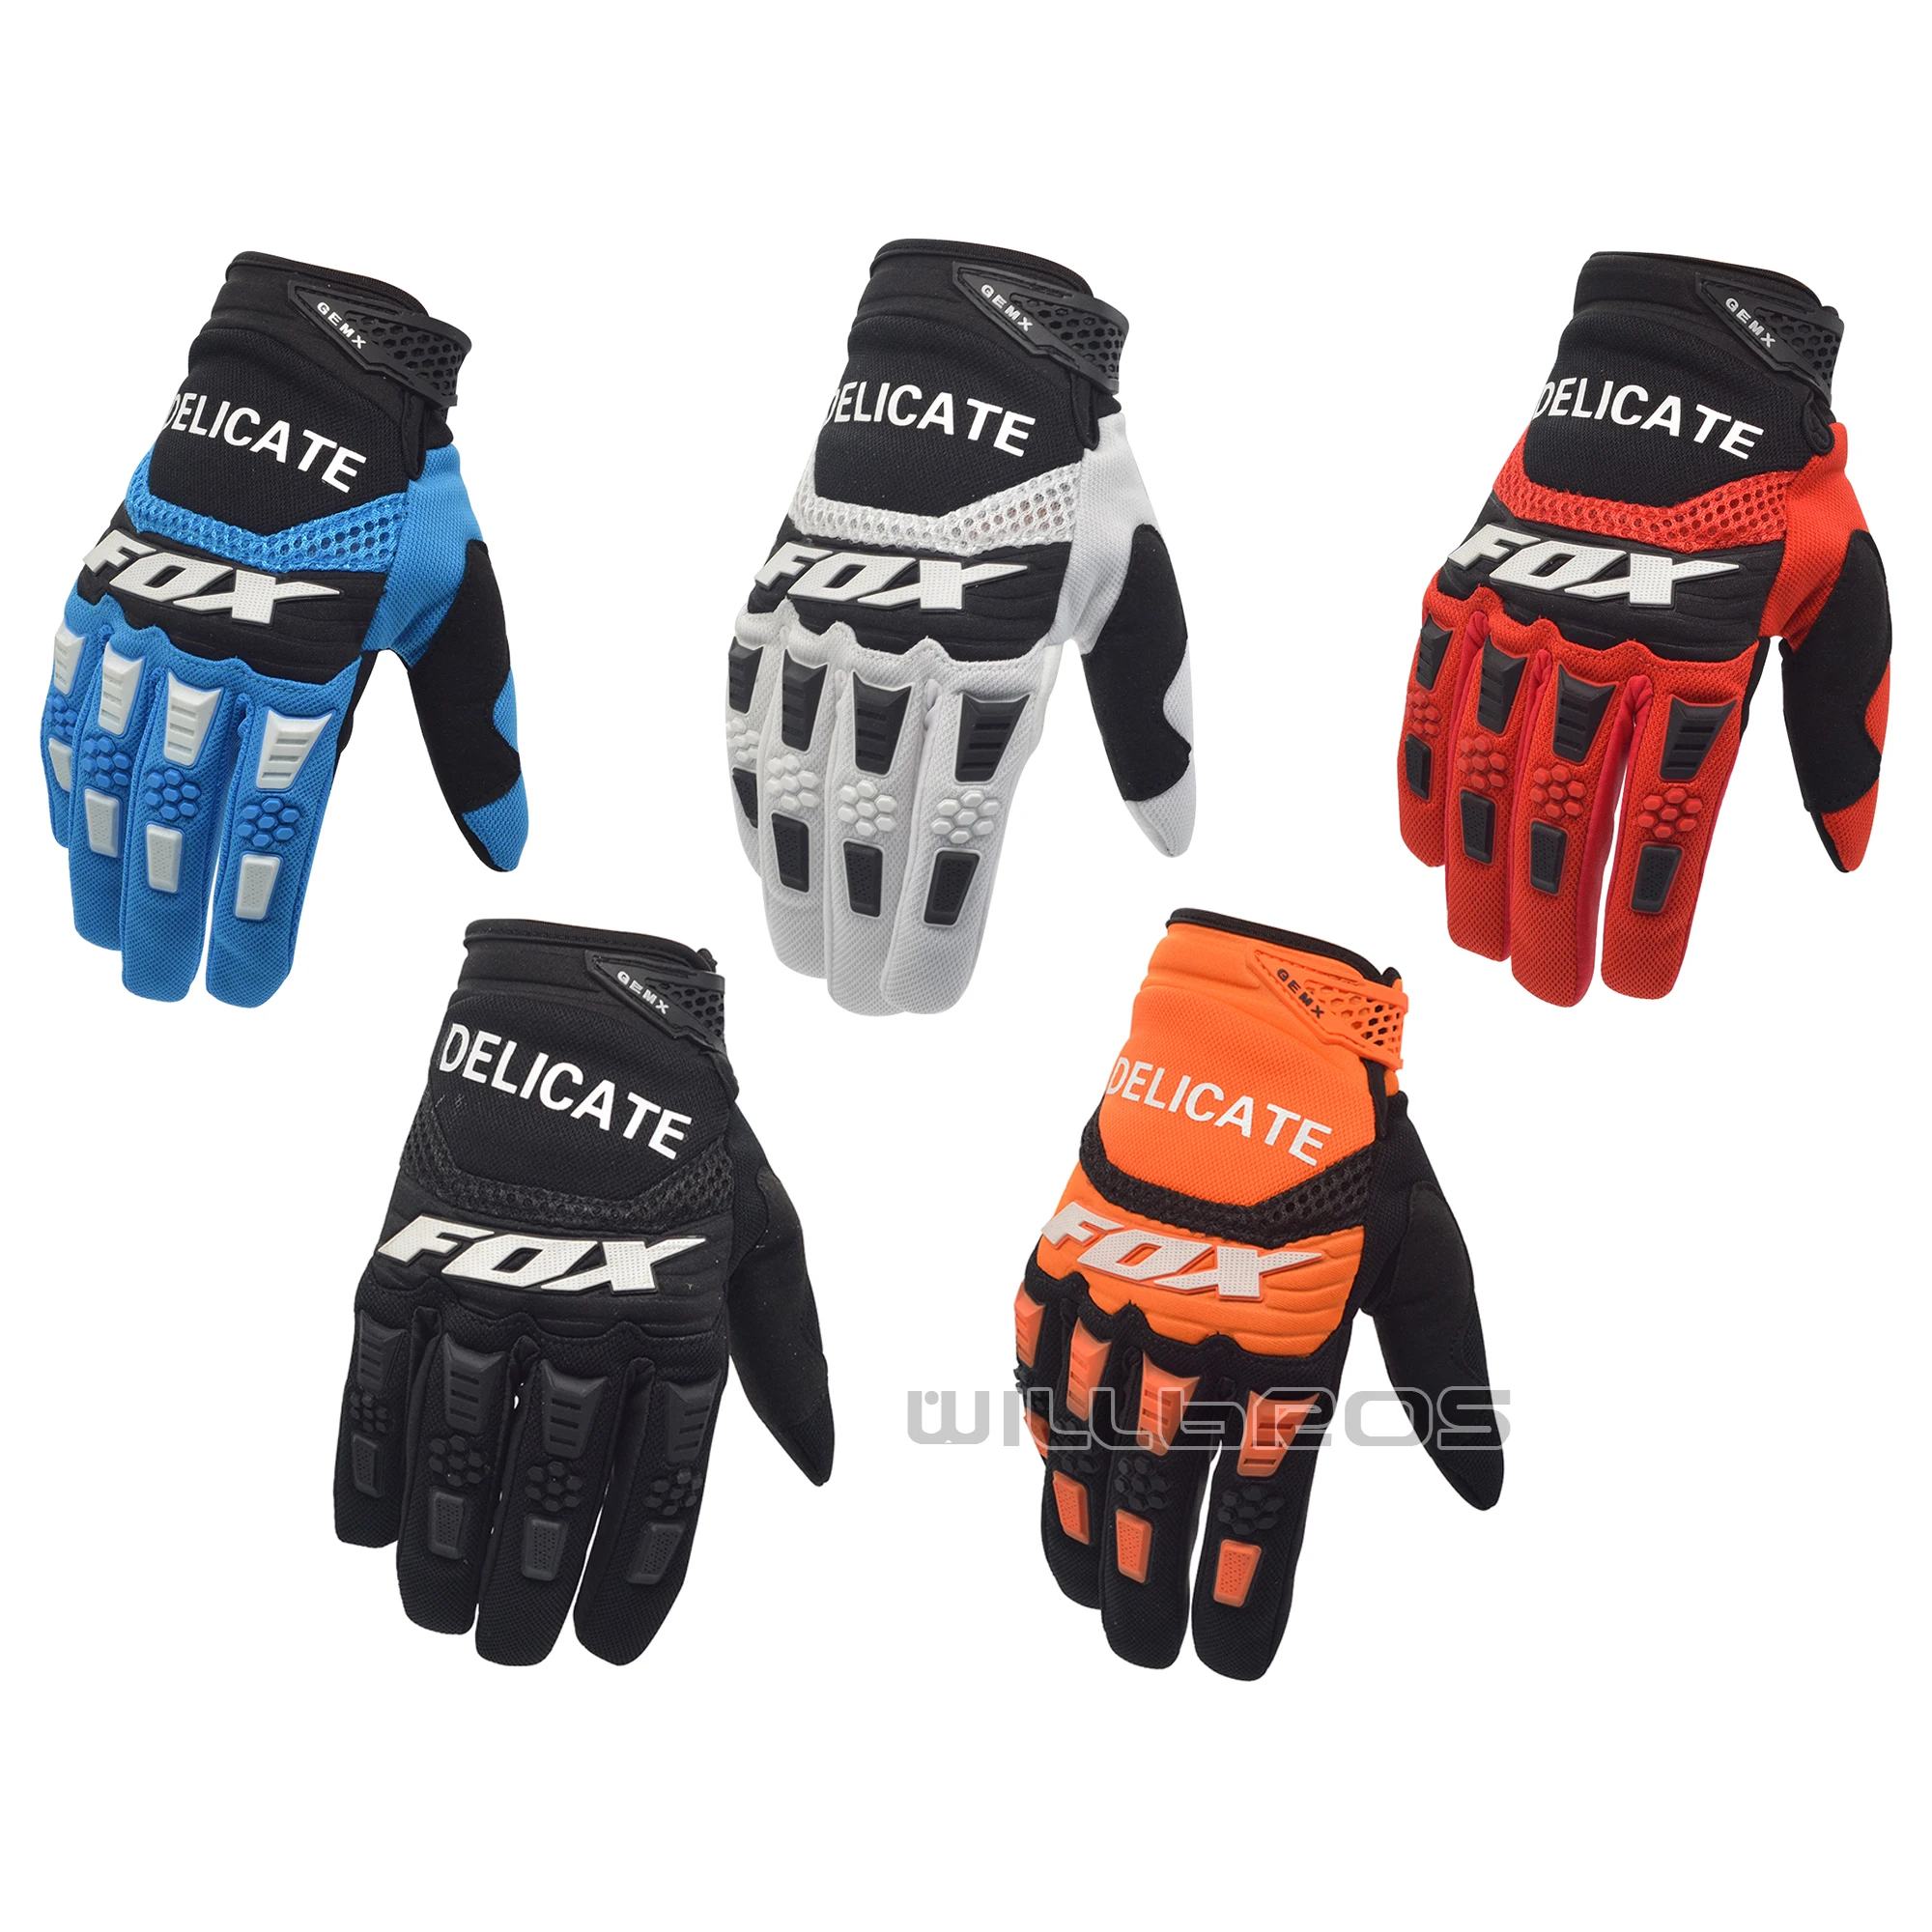 Delicate Fox Gloves MX BMX Dirt Bike Guantes Cycling Dirt Bike MTB DH Race Enduor Motocross Mountain Bicycle Luvas For Men